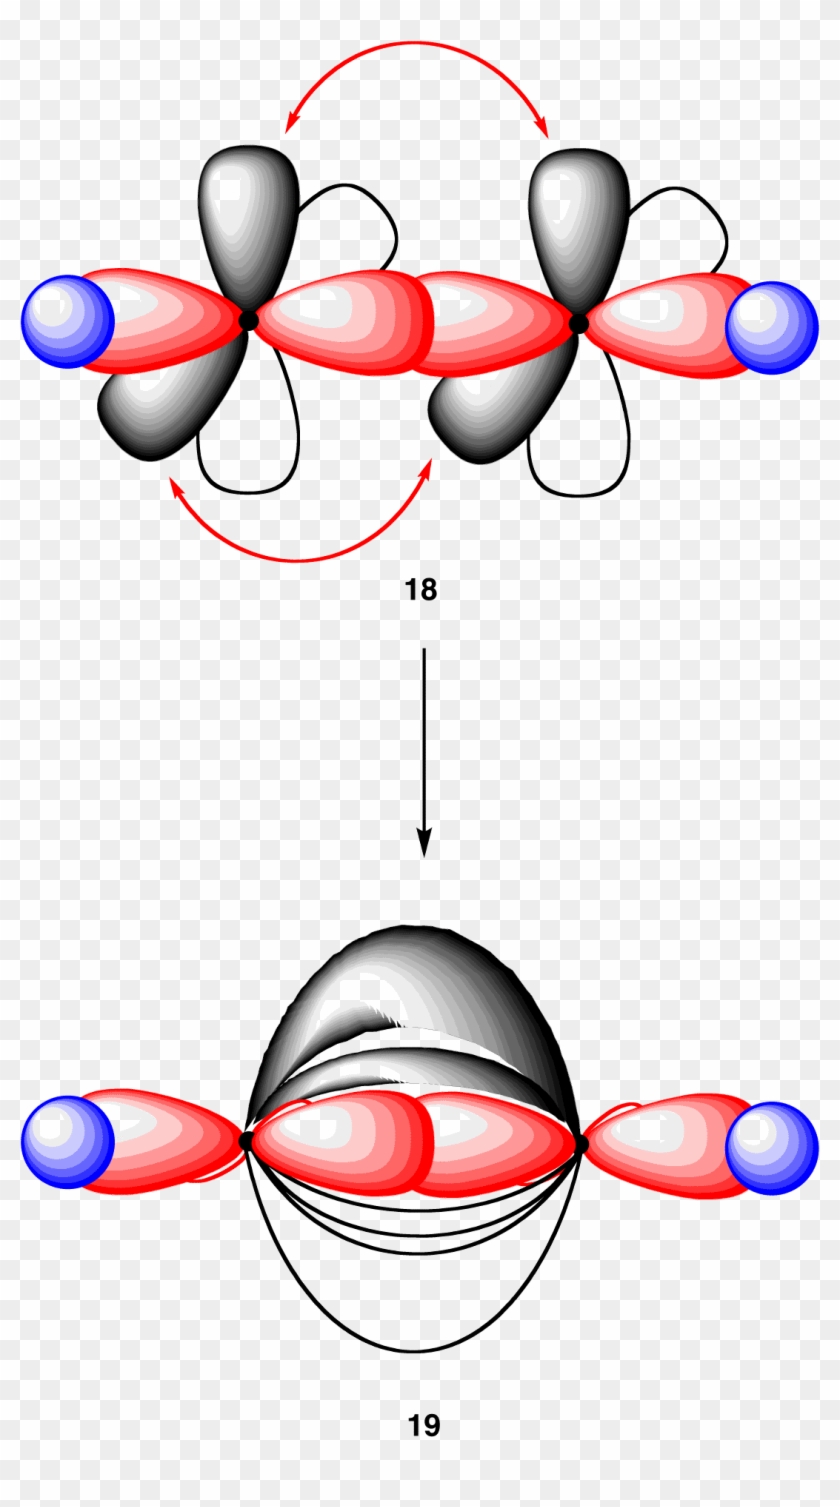 Hydrogen Electrons - Chem4kids Com Hydrogen Orbitals And Compounds 